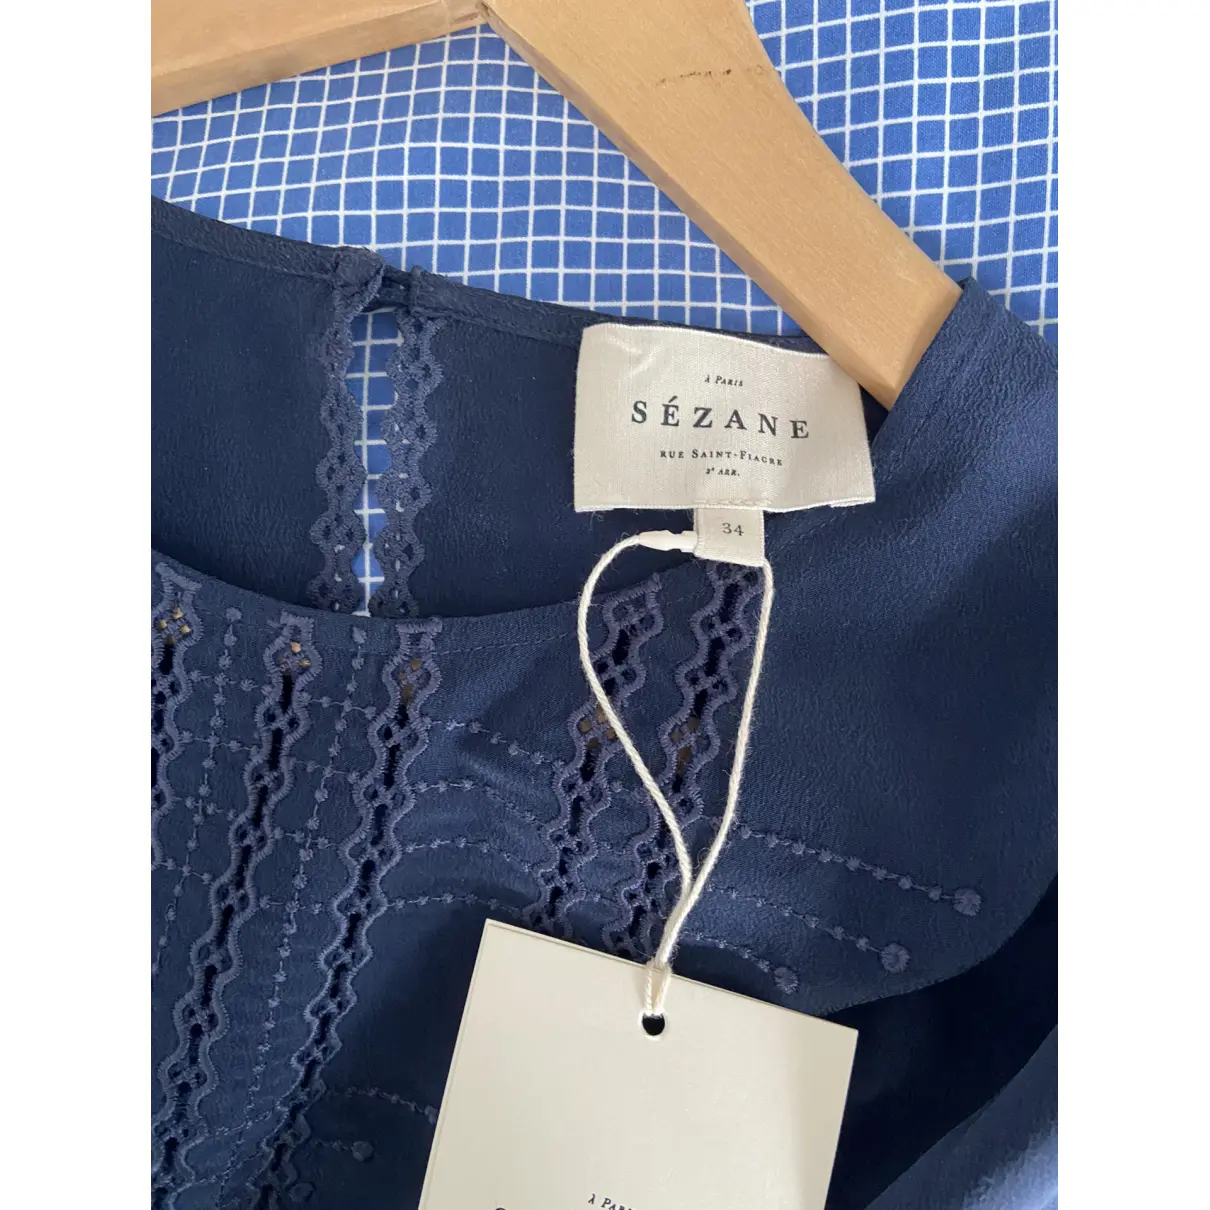 Buy Sézane Spring Summer 2020 silk blouse online